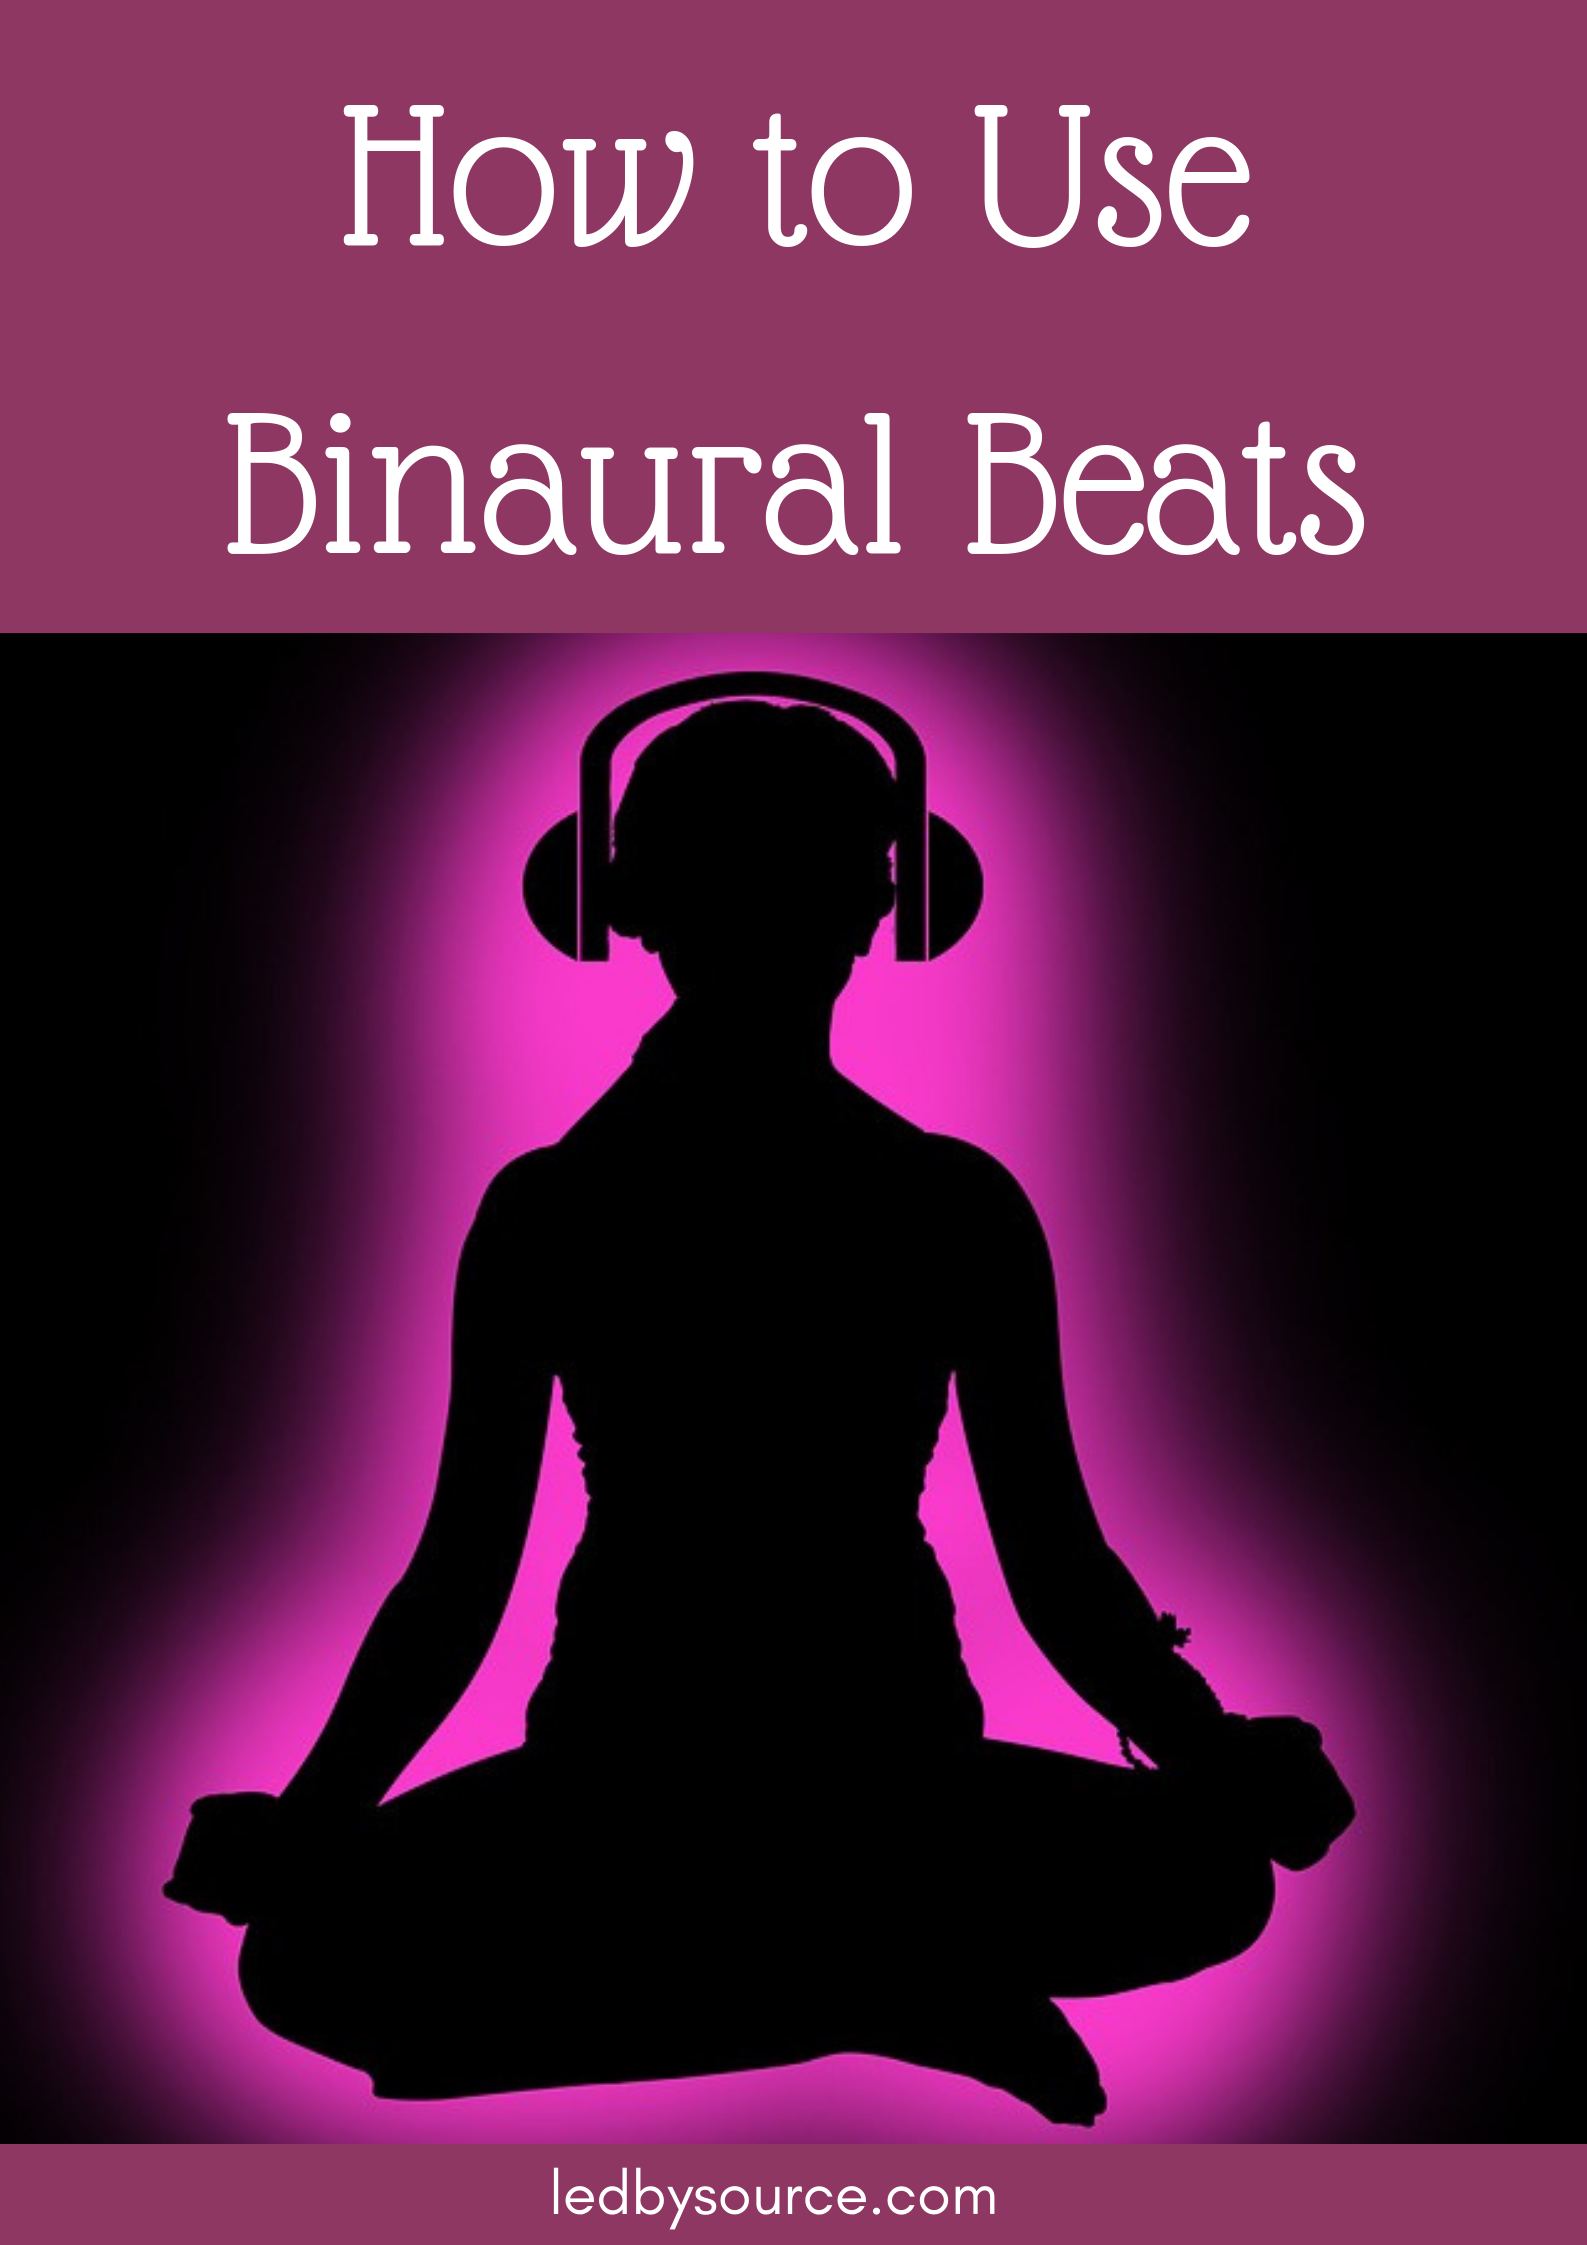 are binaural beats scientifically proven